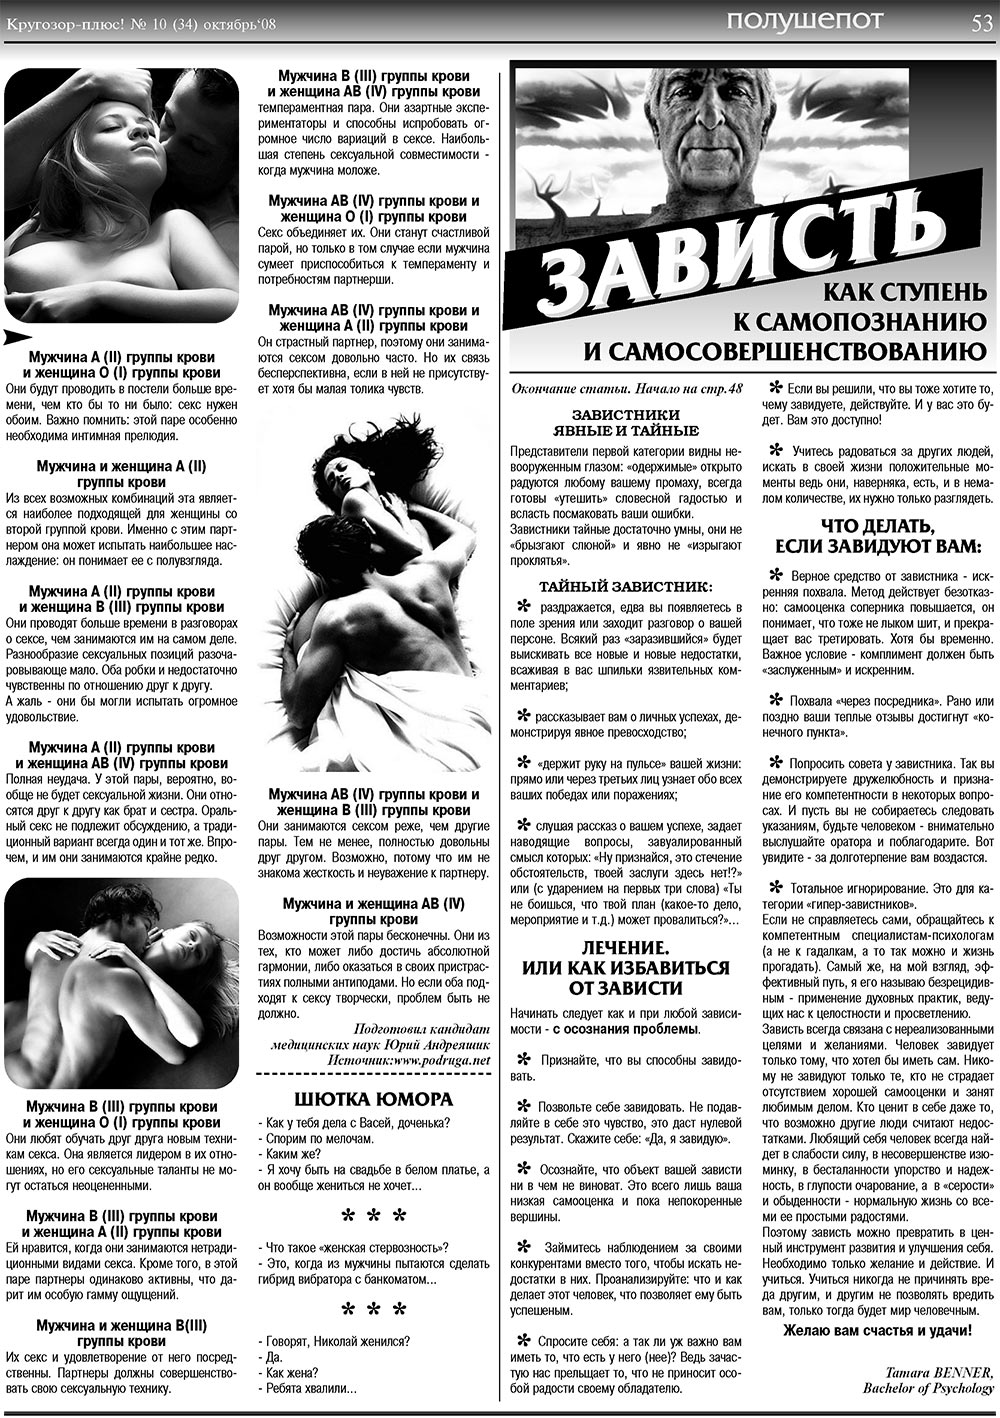 Кругозор плюс! (газета). 2008 год, номер 10, стр. 53